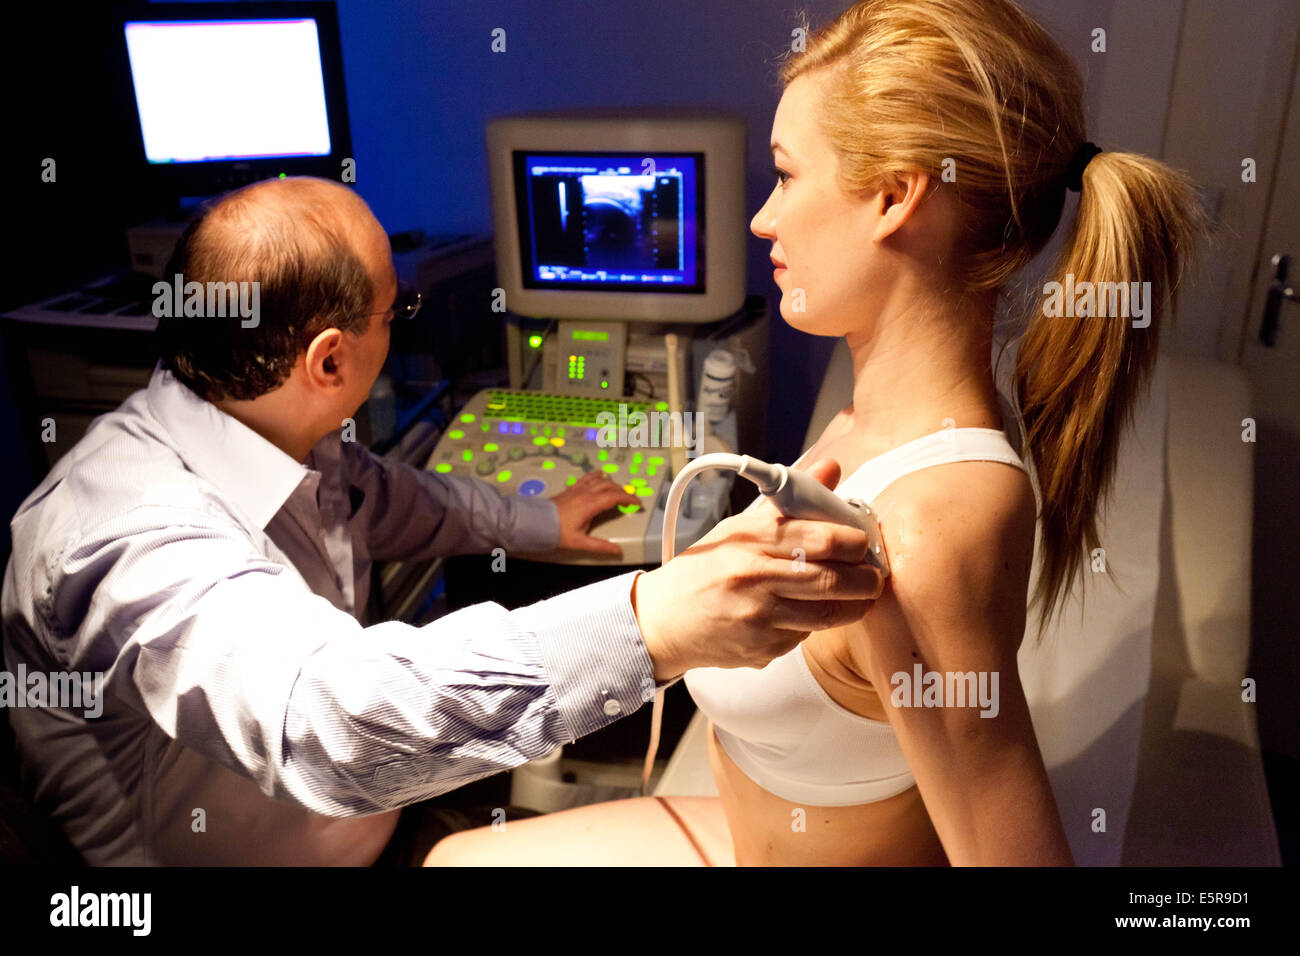 Woman shoulder ultrasound scan Photo - Alamy